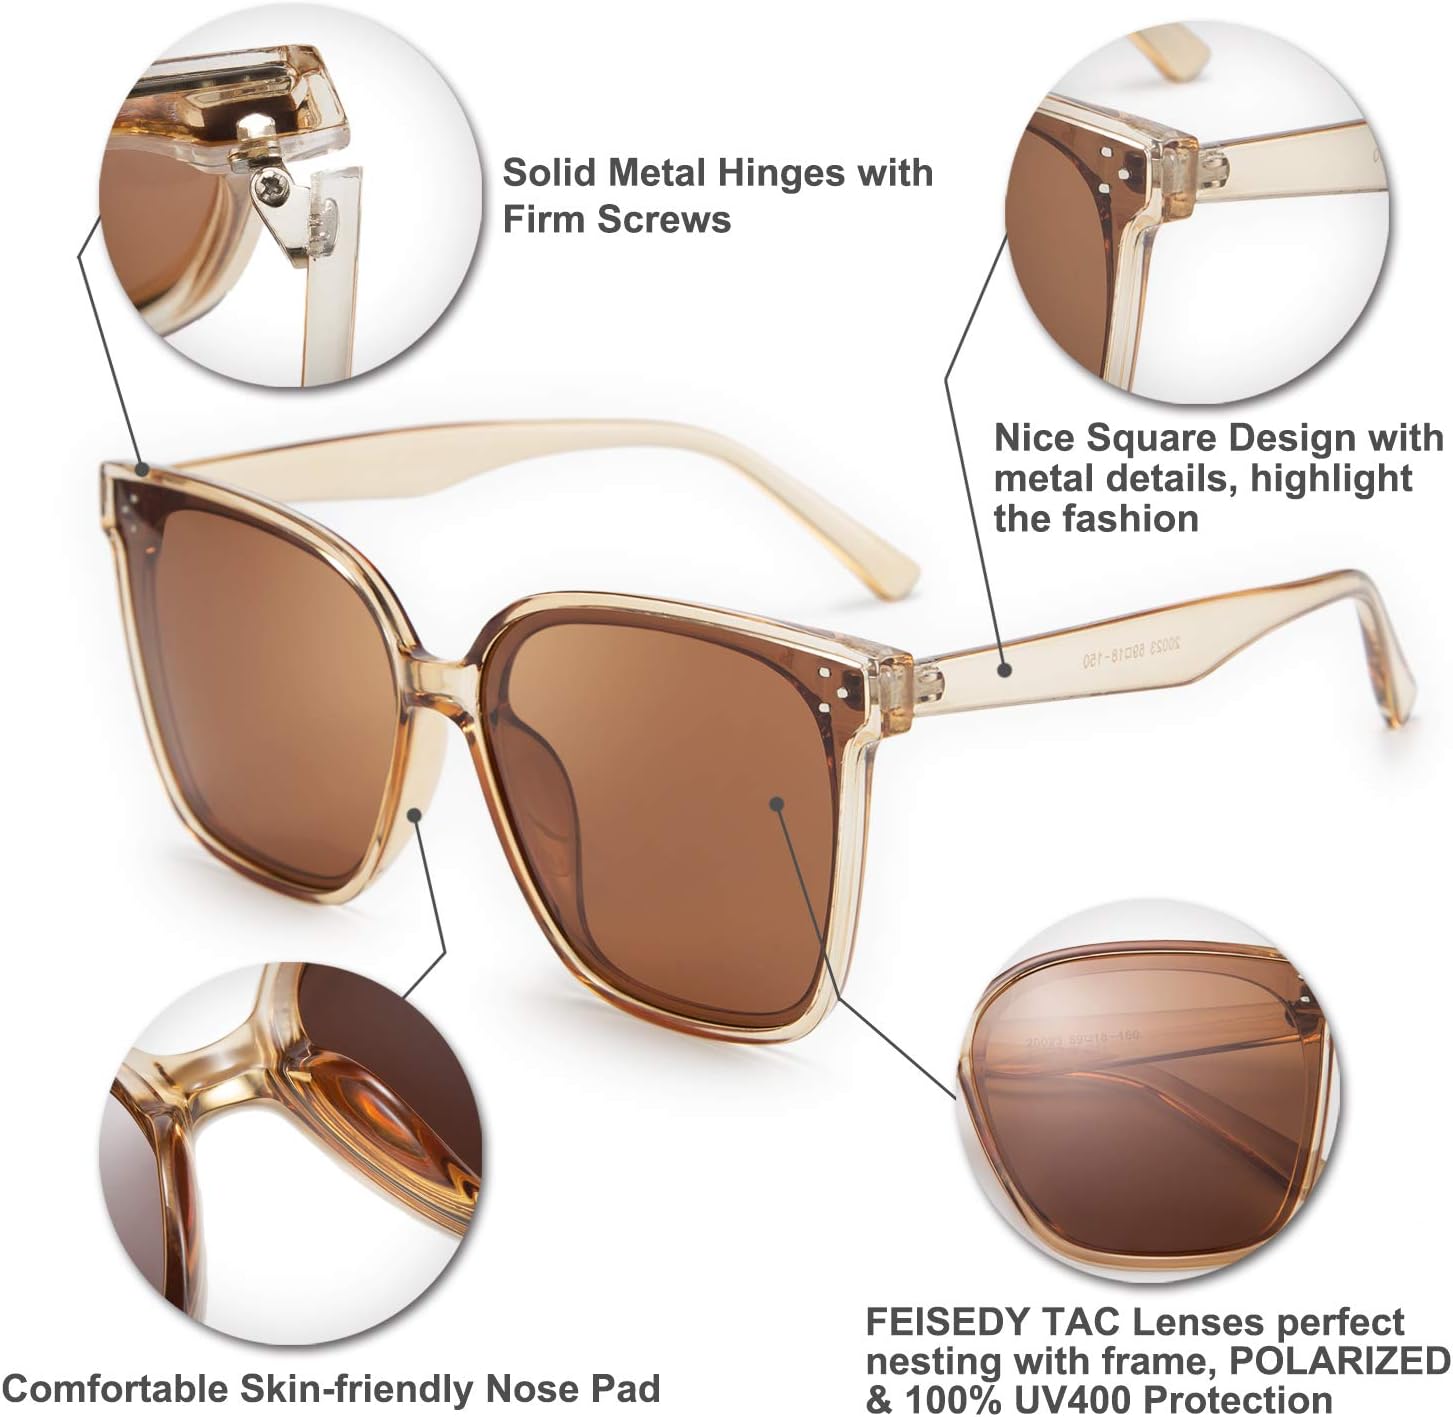 FEISEDY Polarized Fashion Sunglasses Oversized Women Men Retro Square Sun Glasses Big Vintage Shades UV Protection B2600